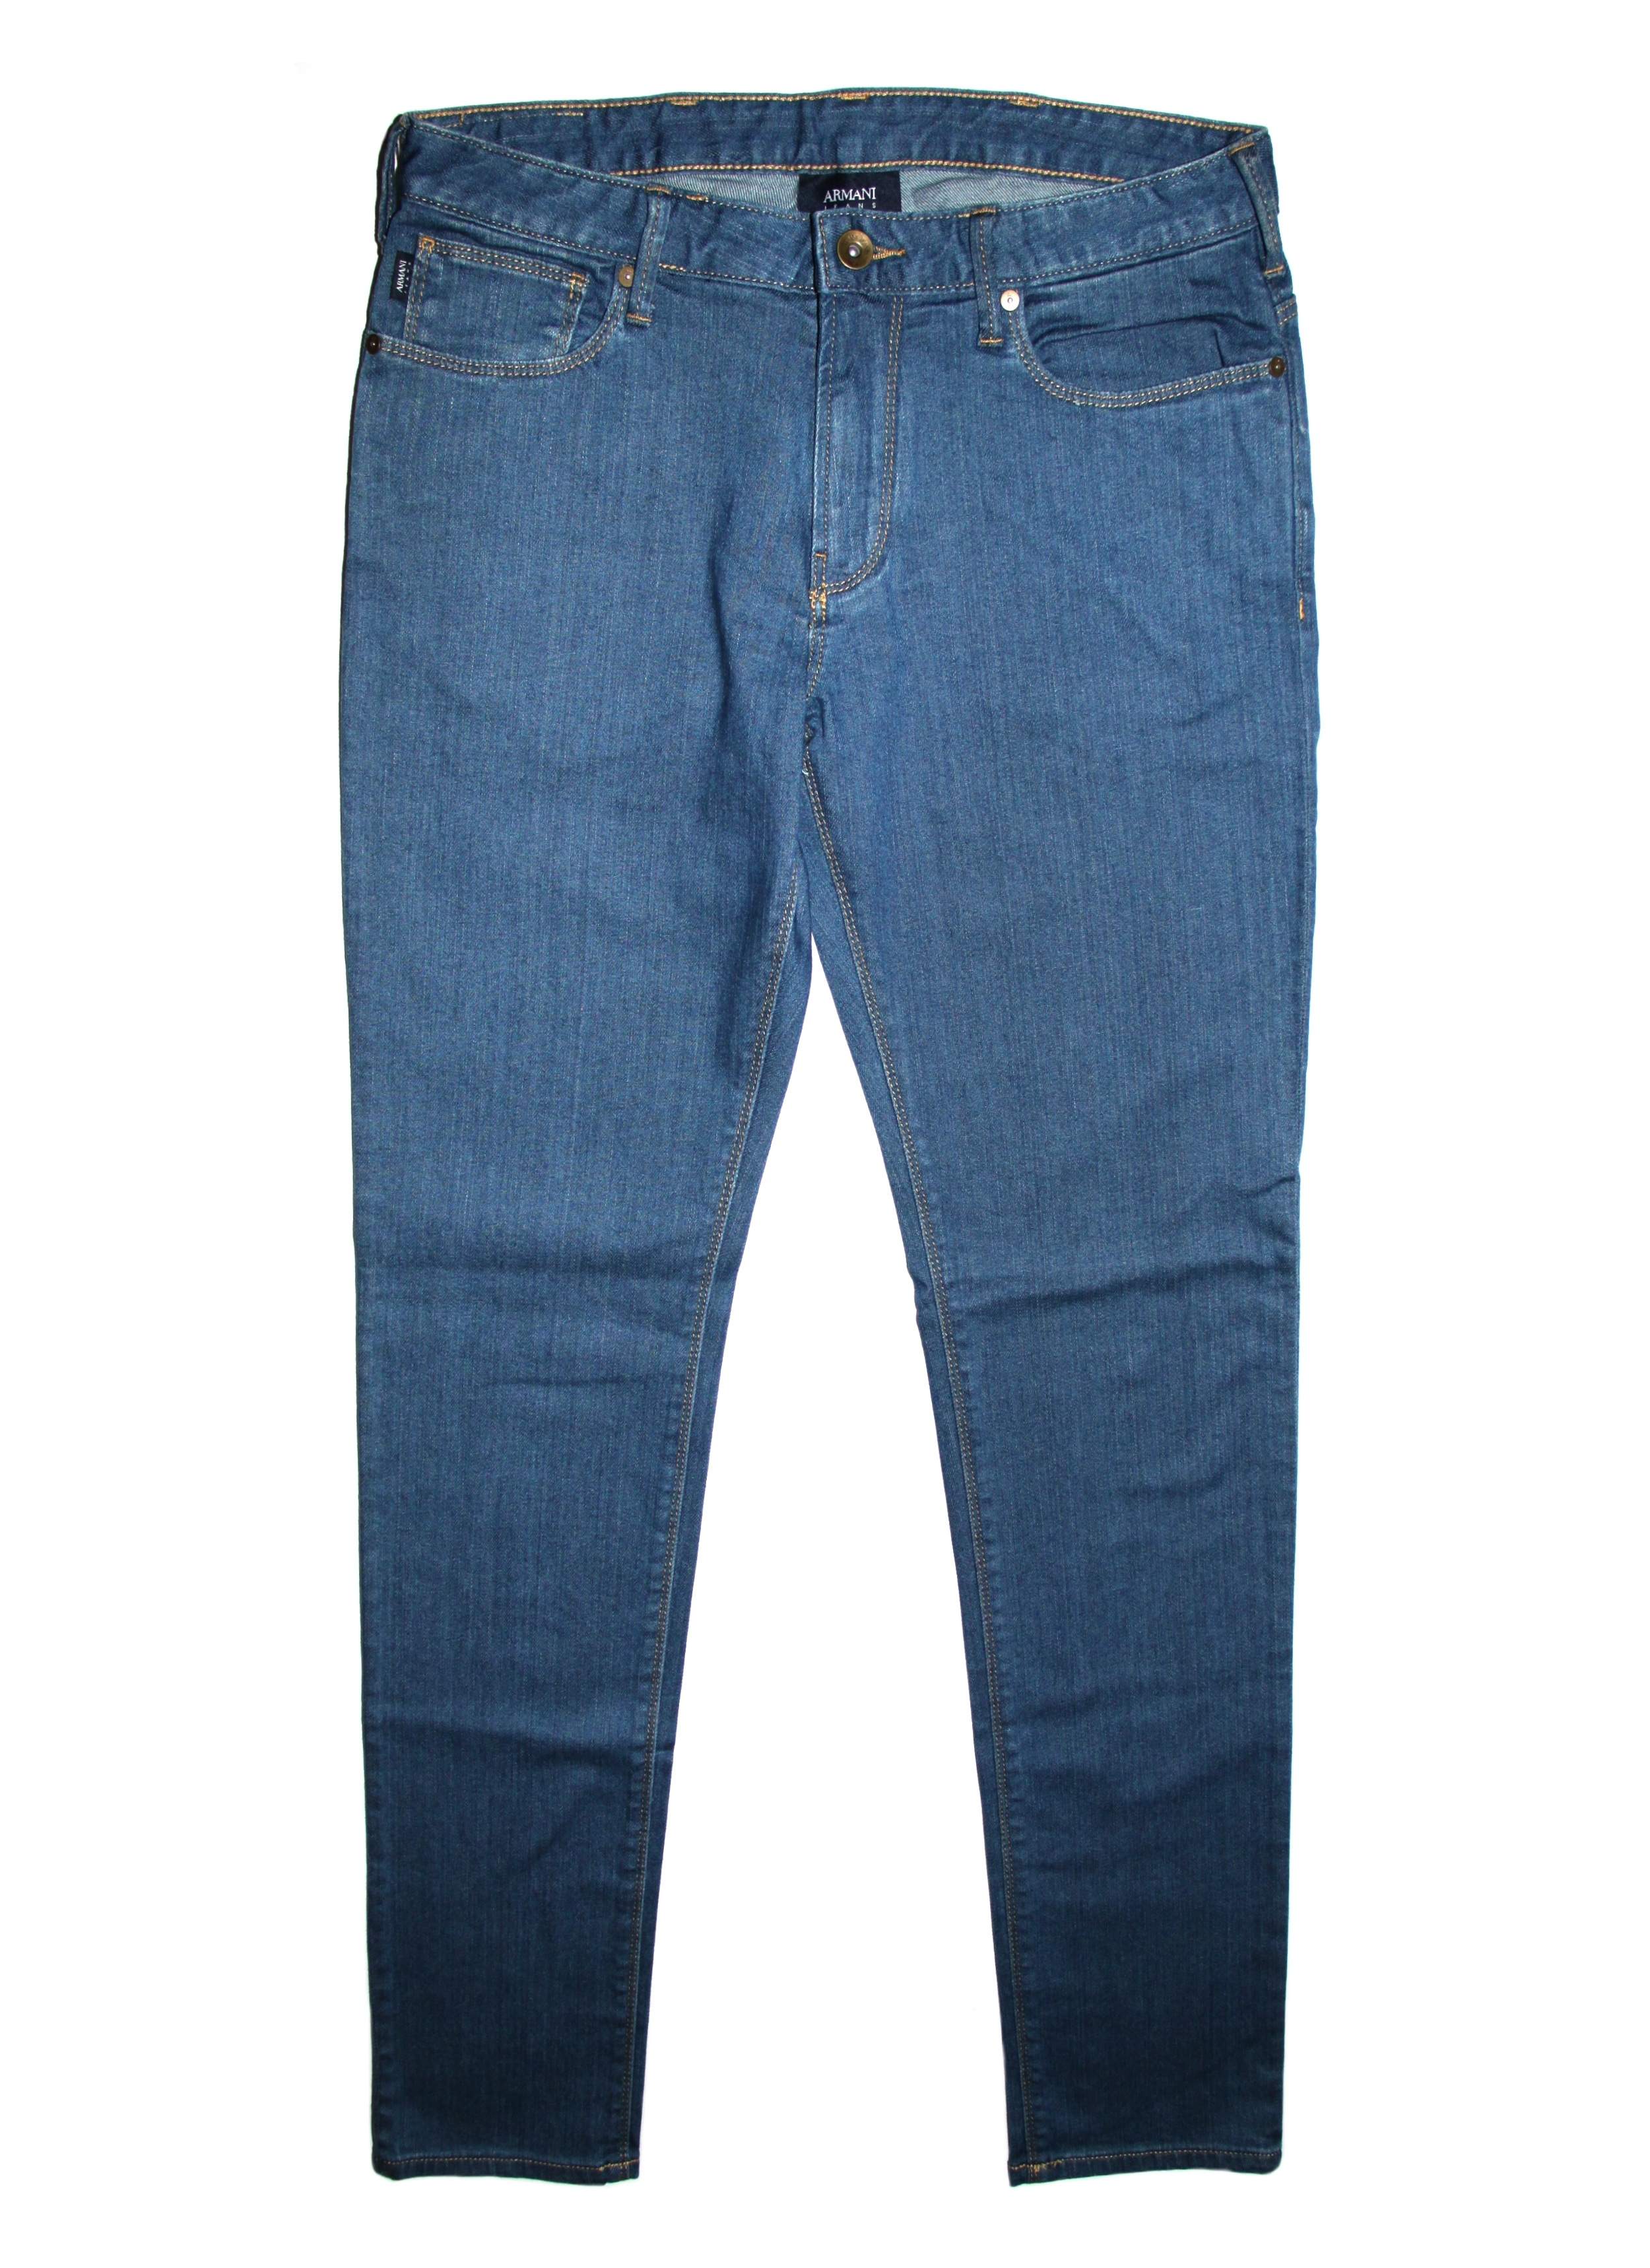 armani jeans j06 slim fit jeans indigo blue